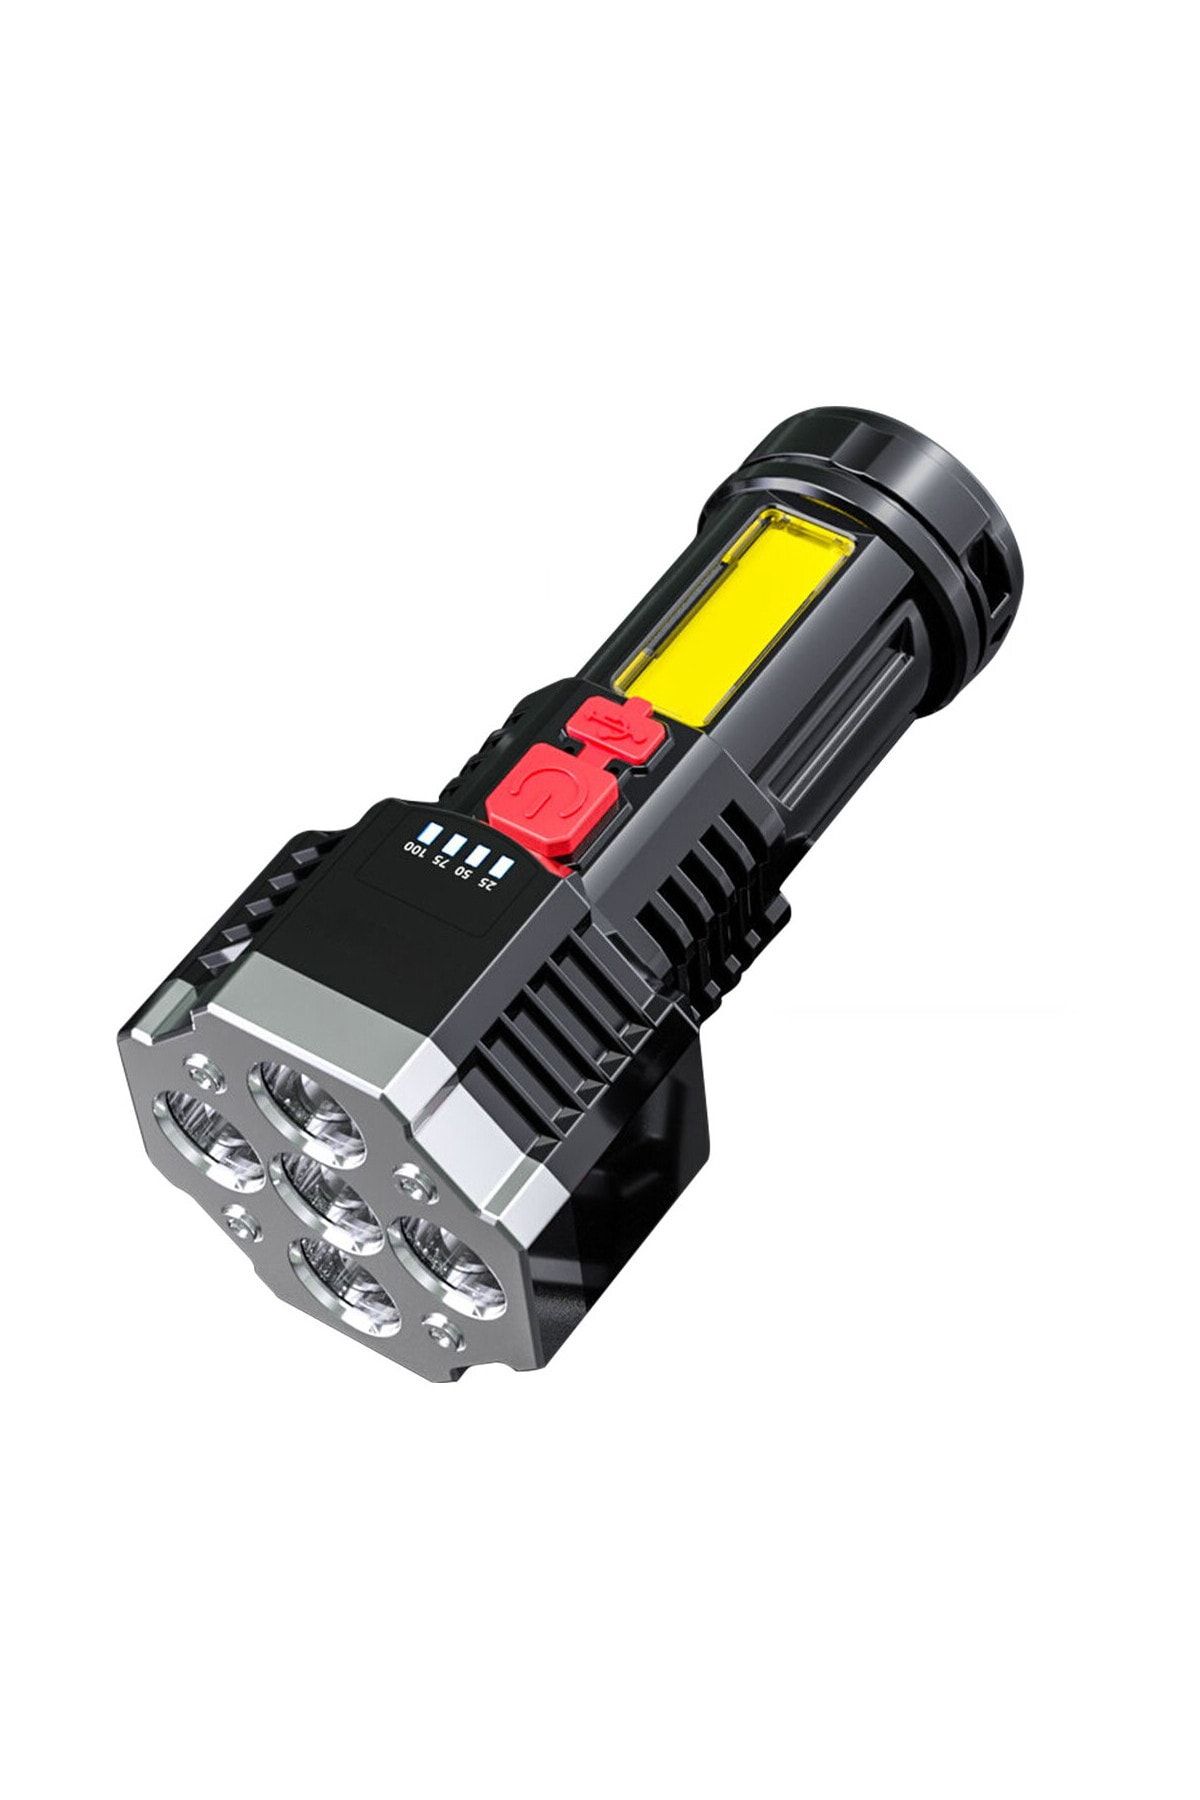 FİTHOME F-t25 Şarj Göstergeli 5 Xpg+cob Led Ultra Güçlü Cob Led Su Geçirmez Usb Şarjlı El Feneri